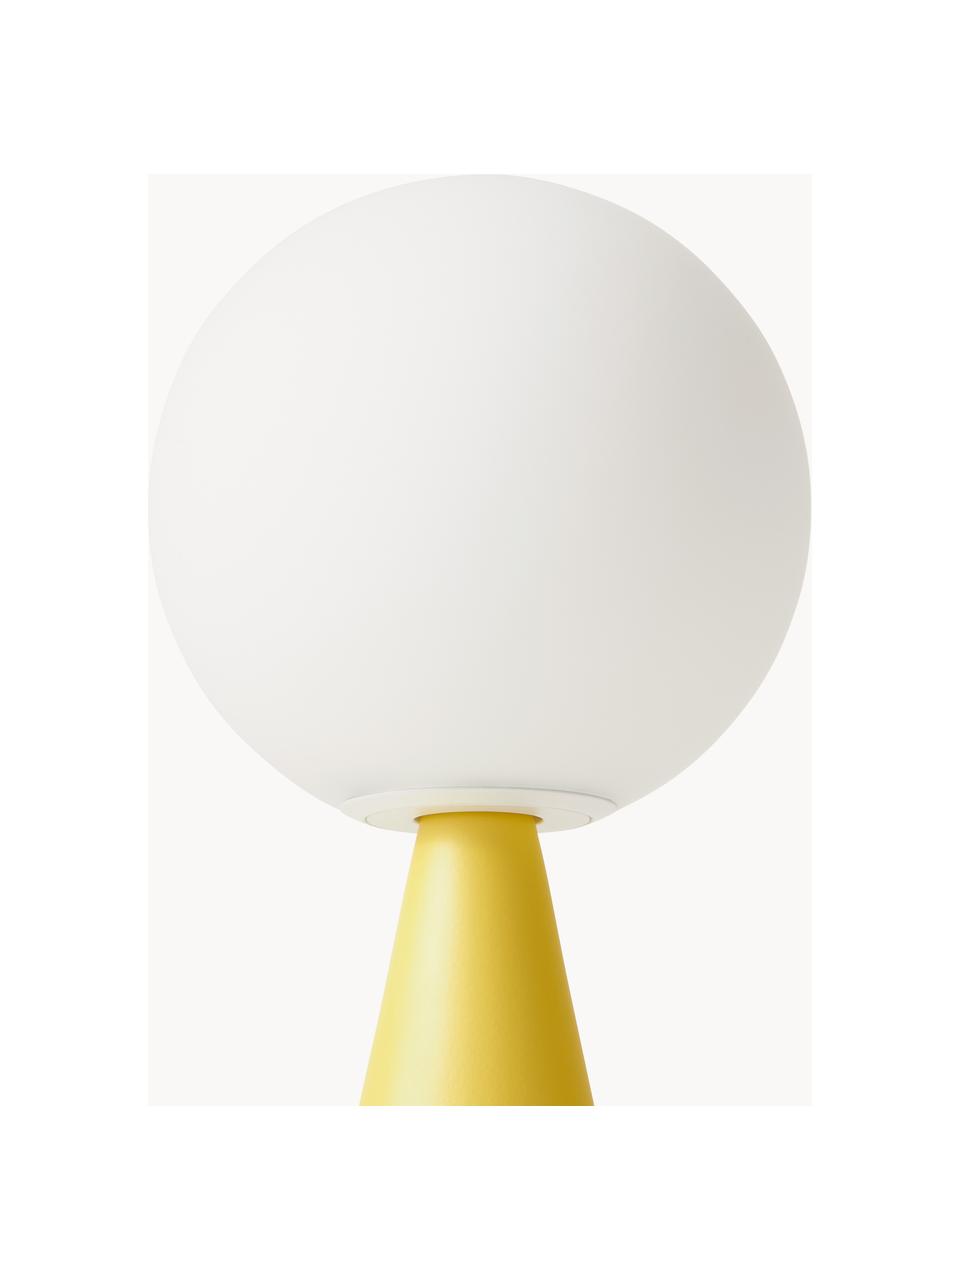 Petite lampe à poser artisanale Bilia, Blanc, jaune citron, Ø 12 x haut. 26 cm